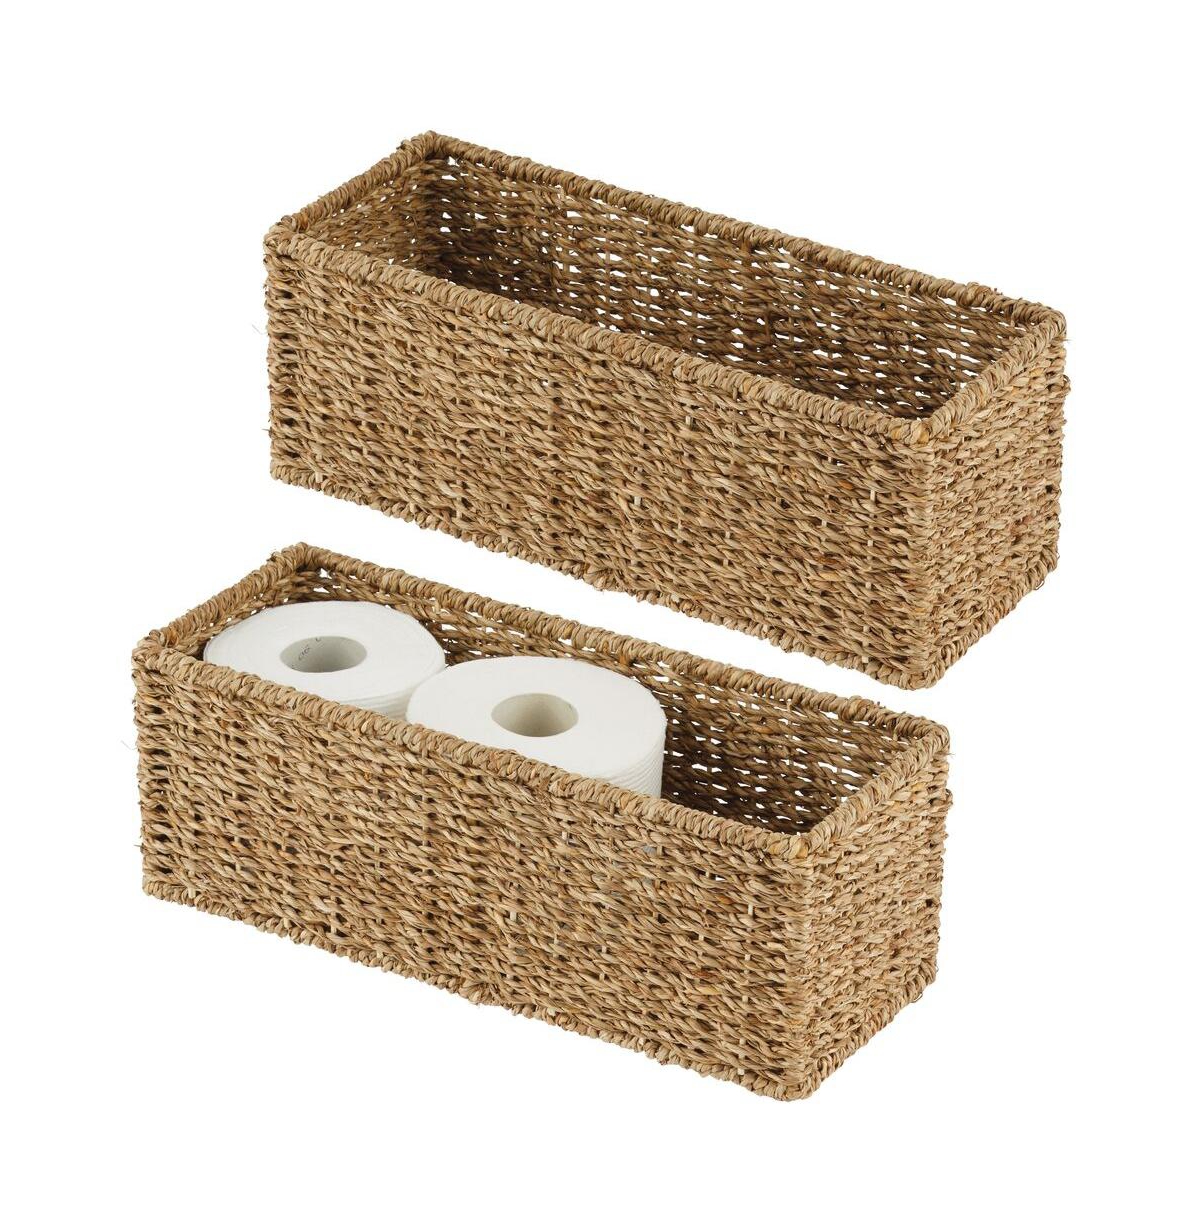 Small Woven Seagrass Bathroom Toilet Tank Basket, 2 Pack, Natural/Tan - Natural